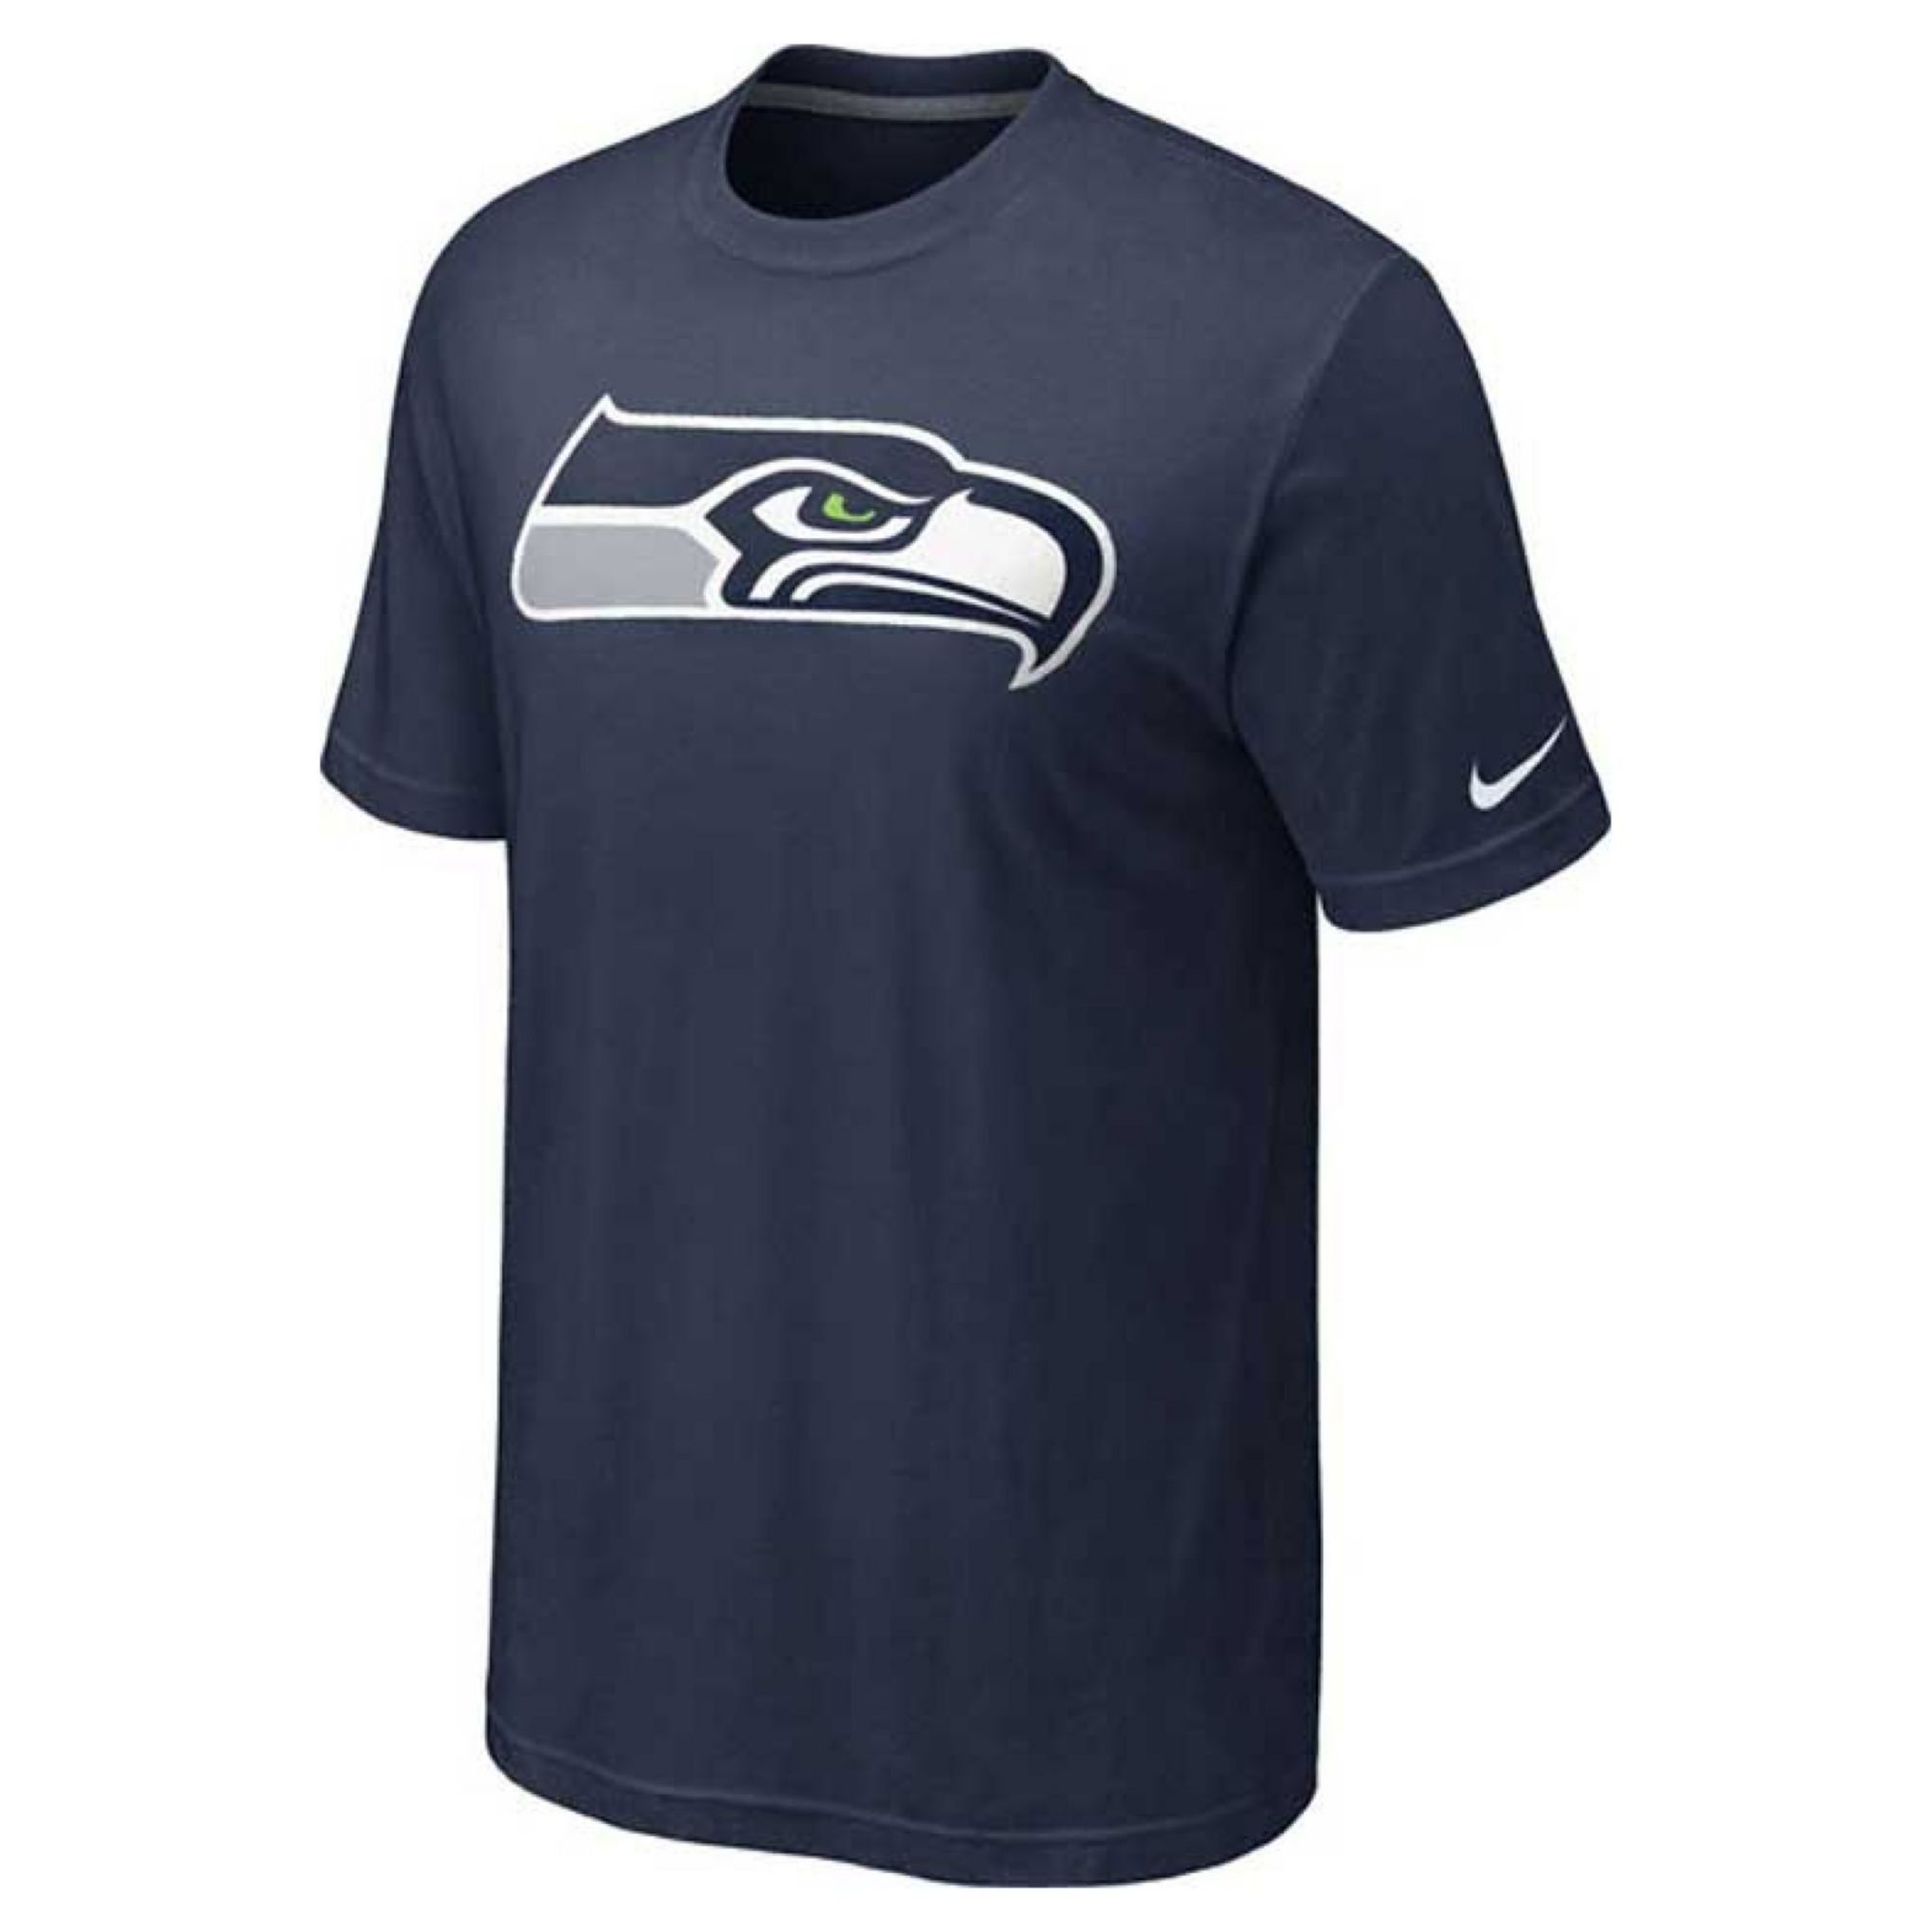 Lyst - Nike Mens Short Sleeve Seattle Seahawks T-shirt in Blue for Men